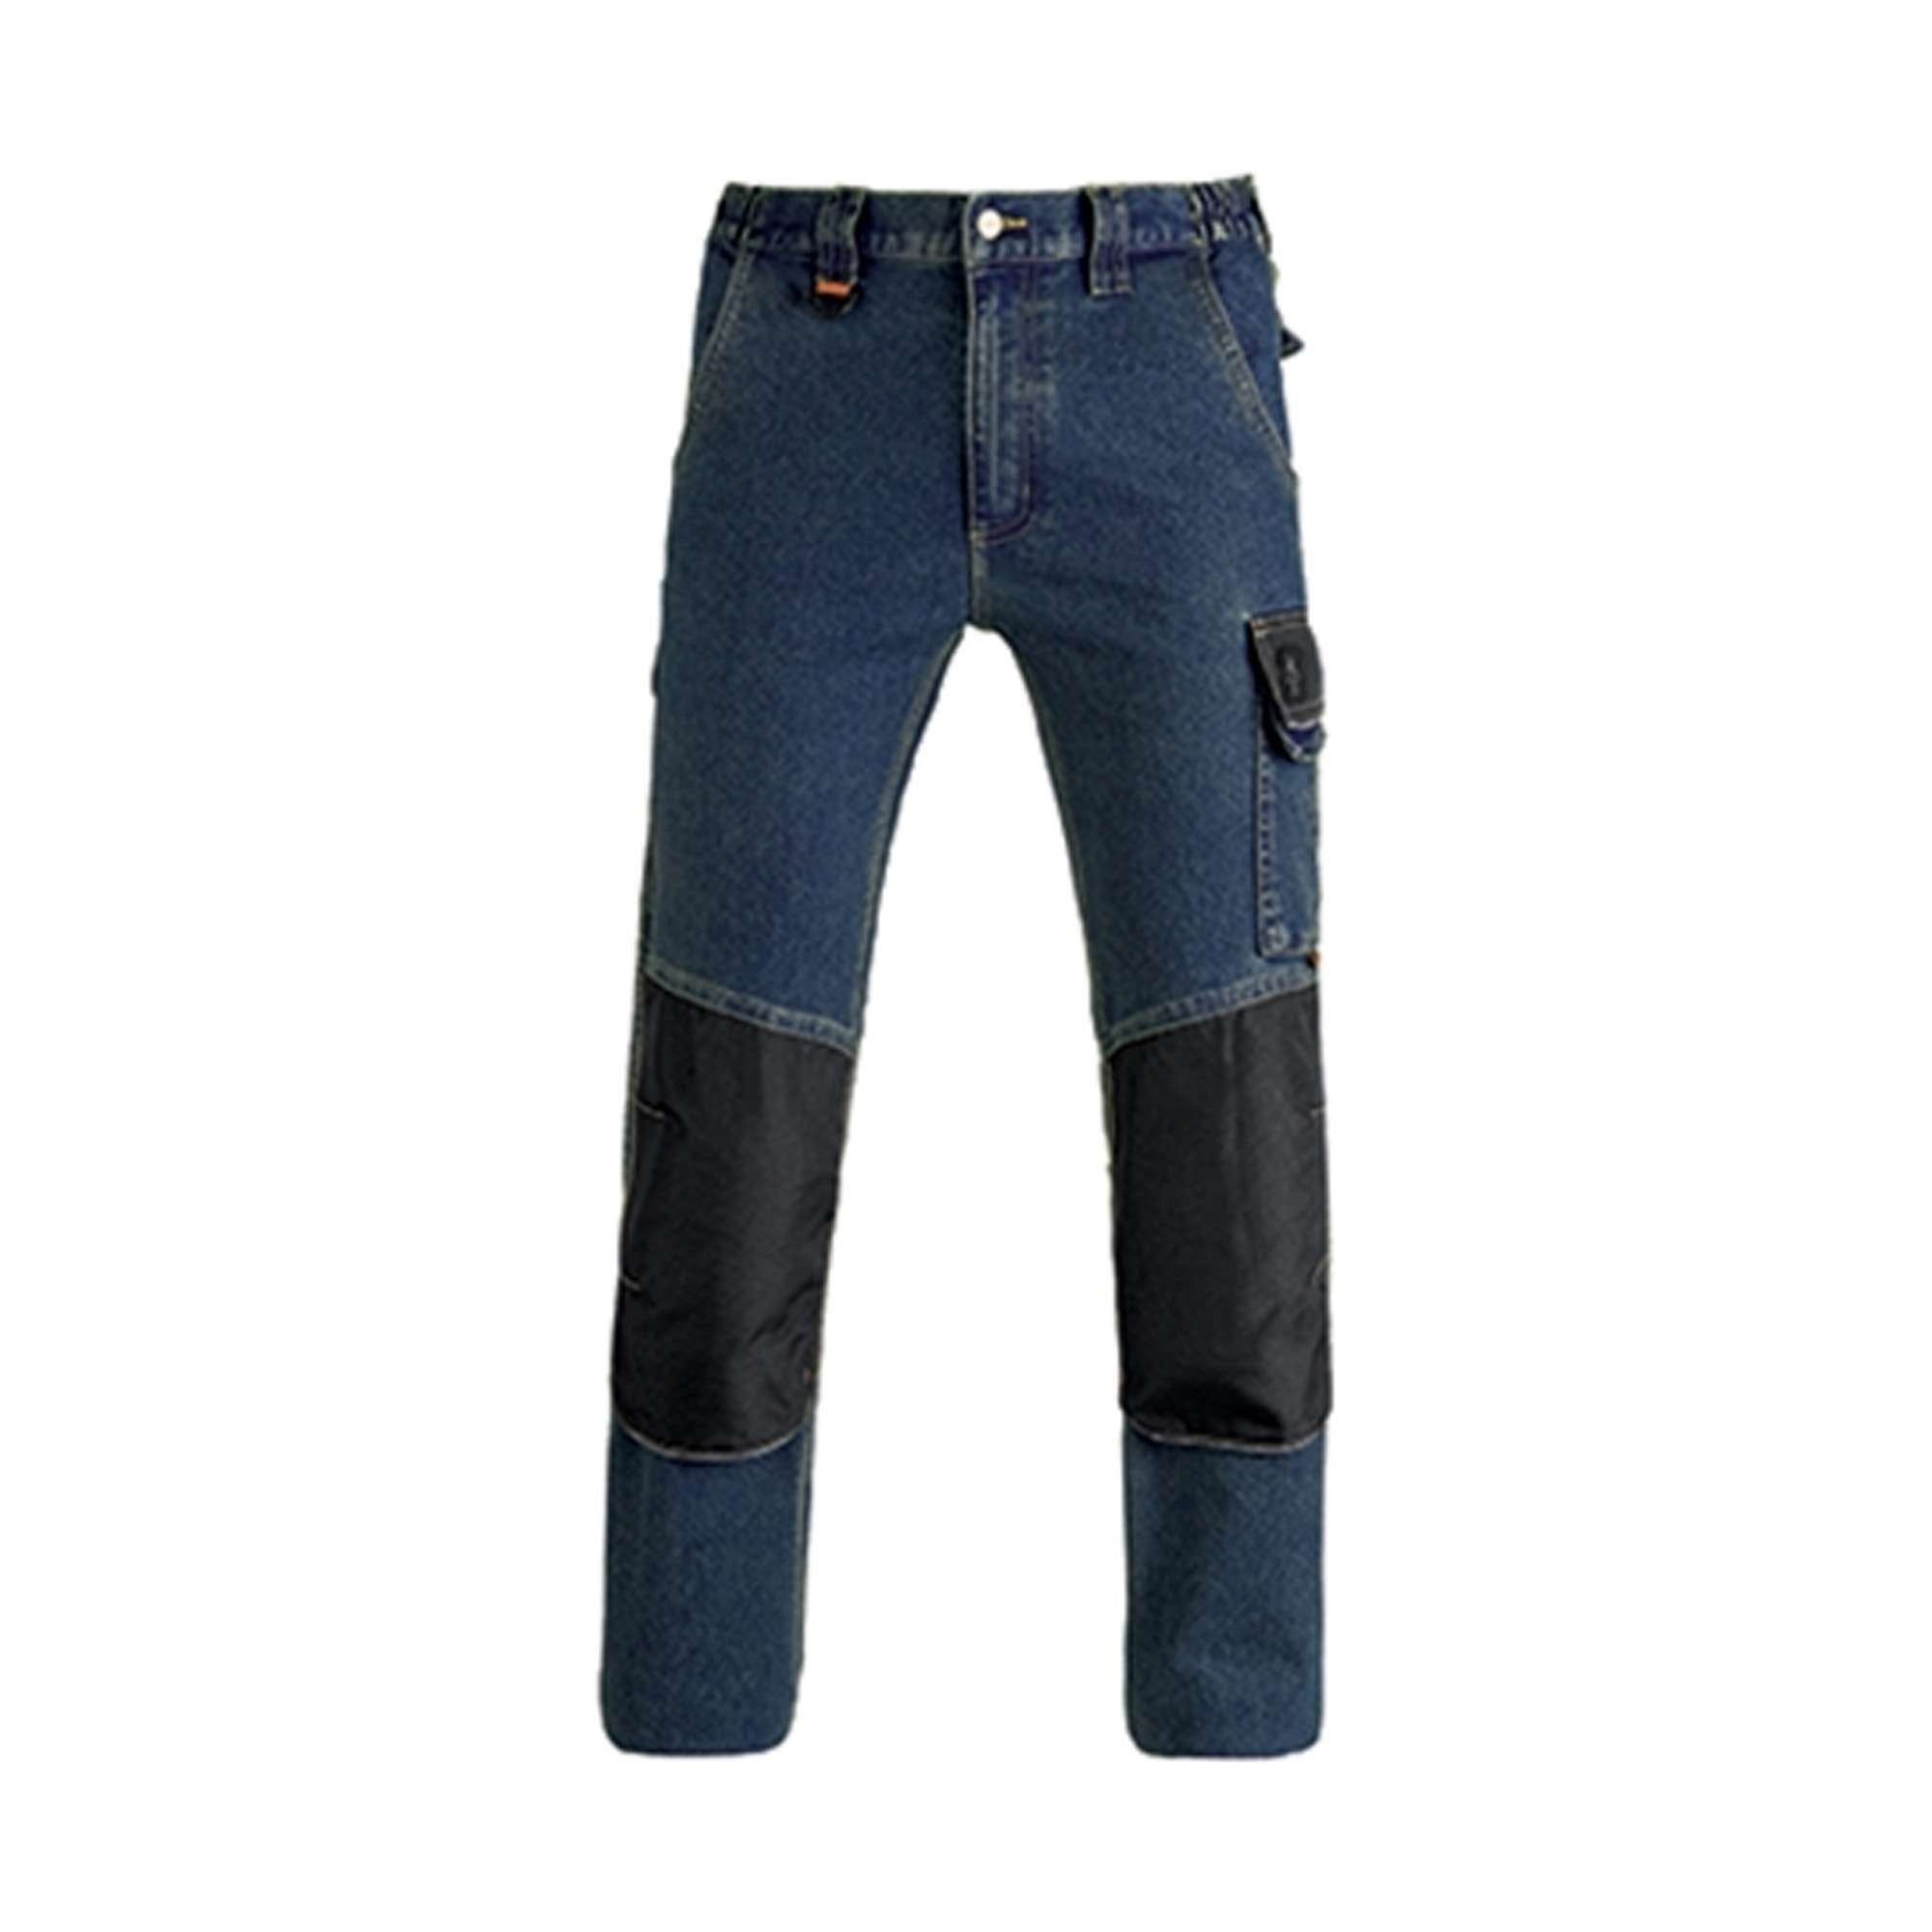 Pantaloni Pro Jeans Teneré Pro Jeans TG. (S - M - L - XXL) - Kapriol